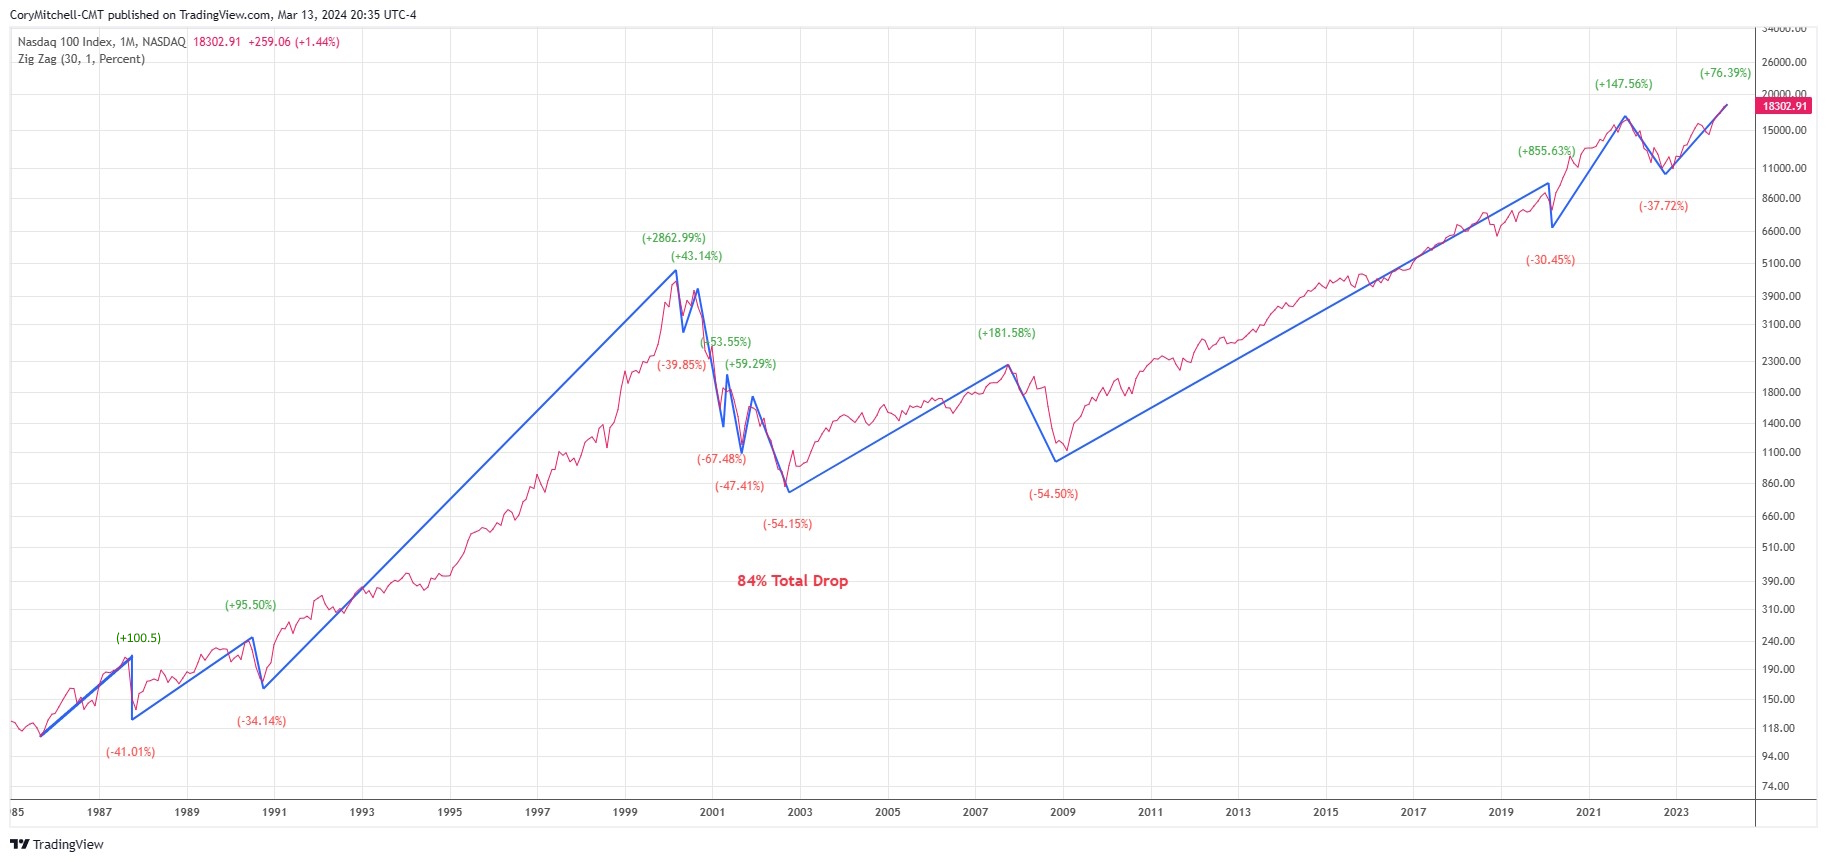 Historical Average Returns for Nasdaq 100 Index (QQQ) - Trade That